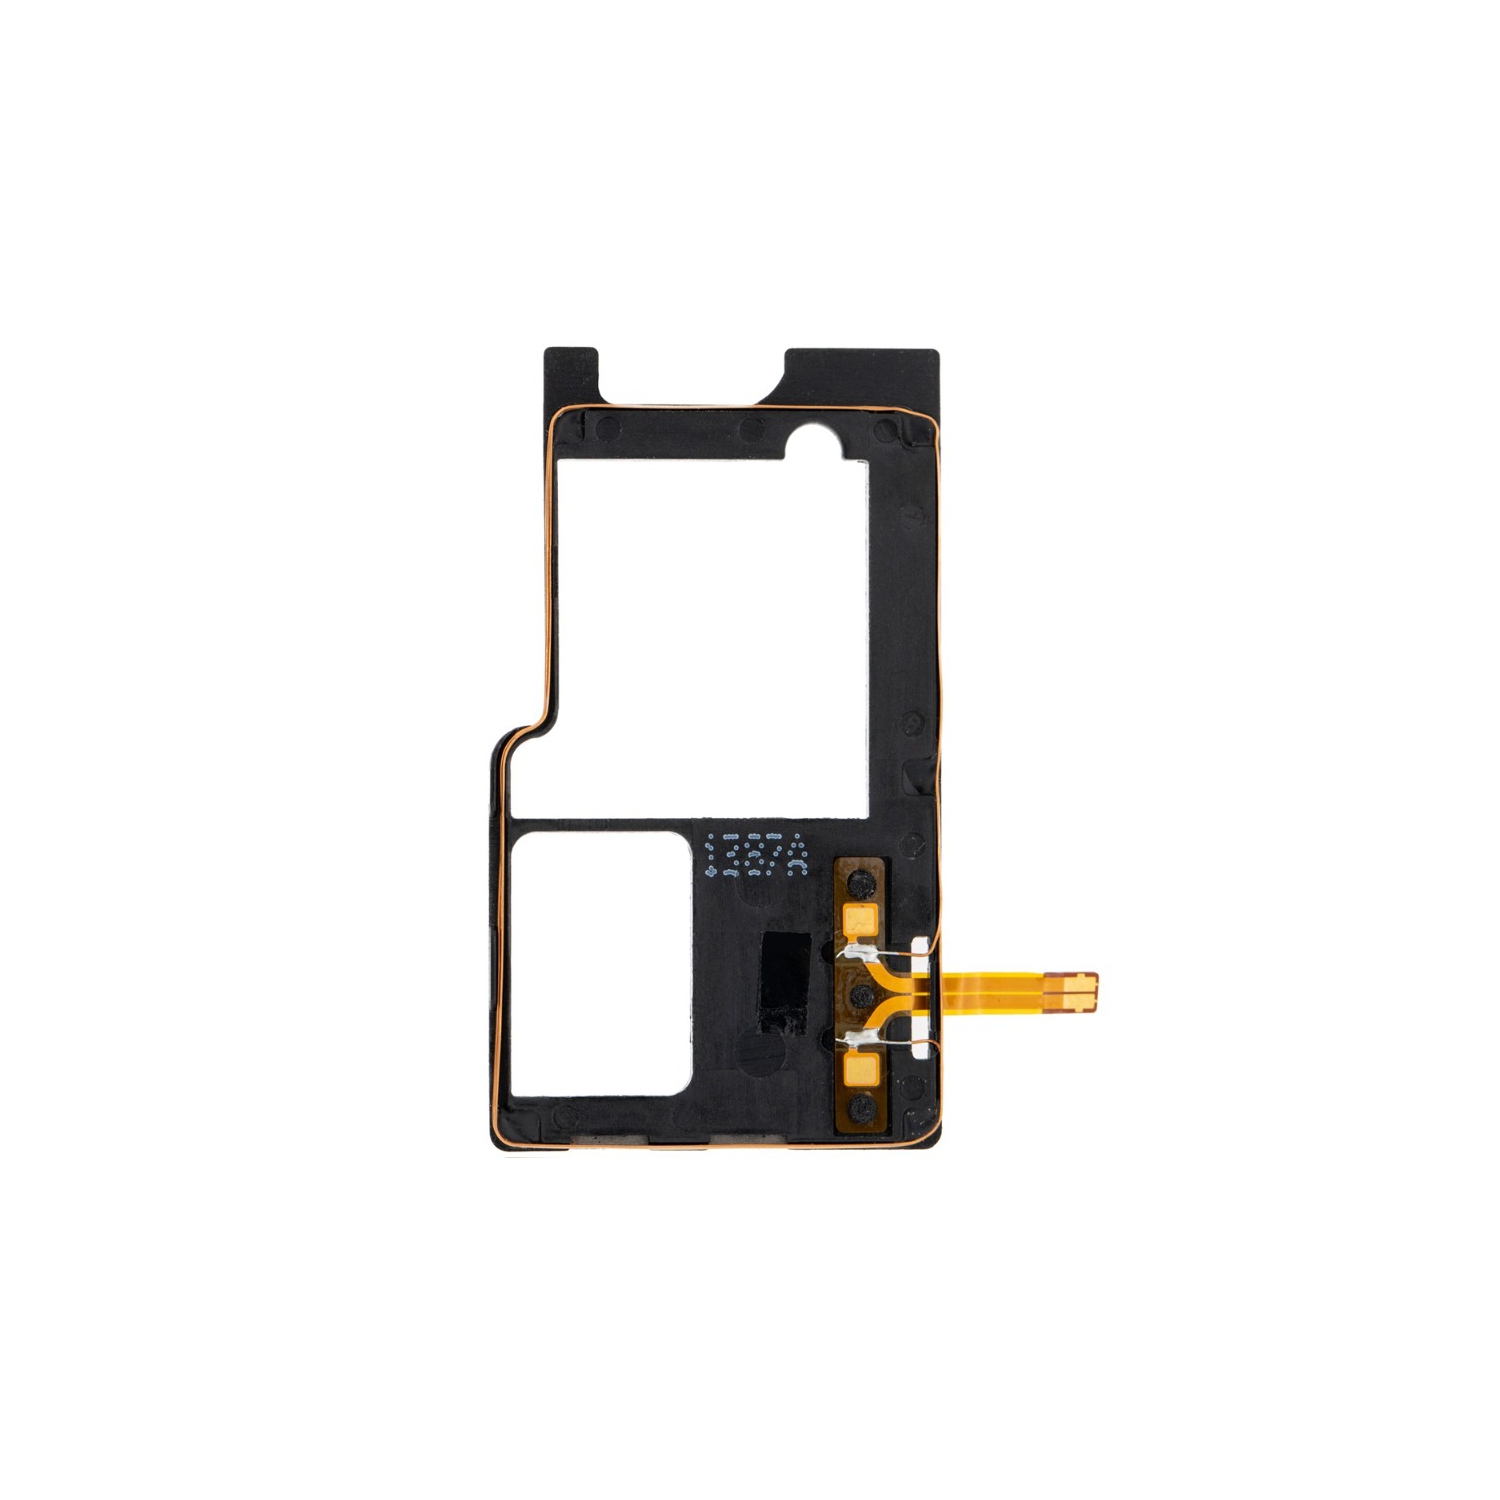 Replacement Right NFC Antenna Sensor Module For Nintendo Switch Joy Con Controller